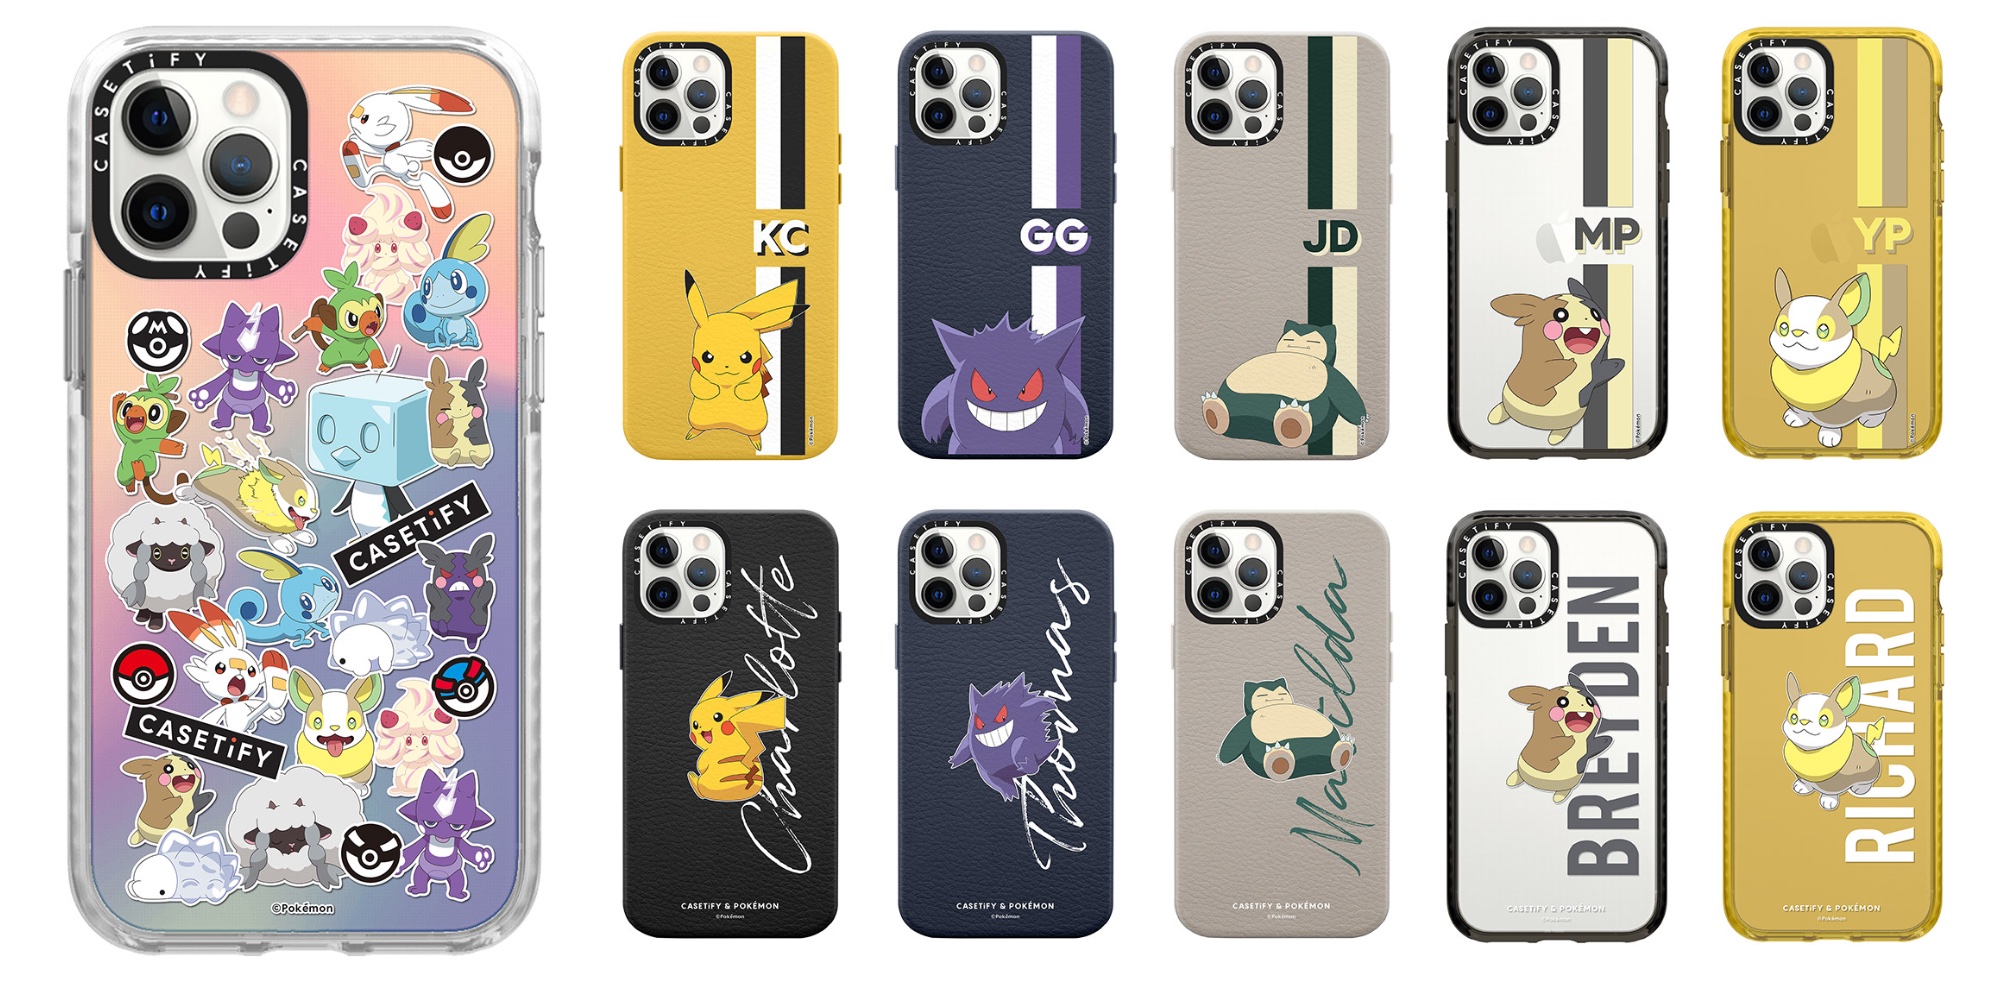 CASETiFY Pokémon iPhone 12 collaboration 9to5Toys